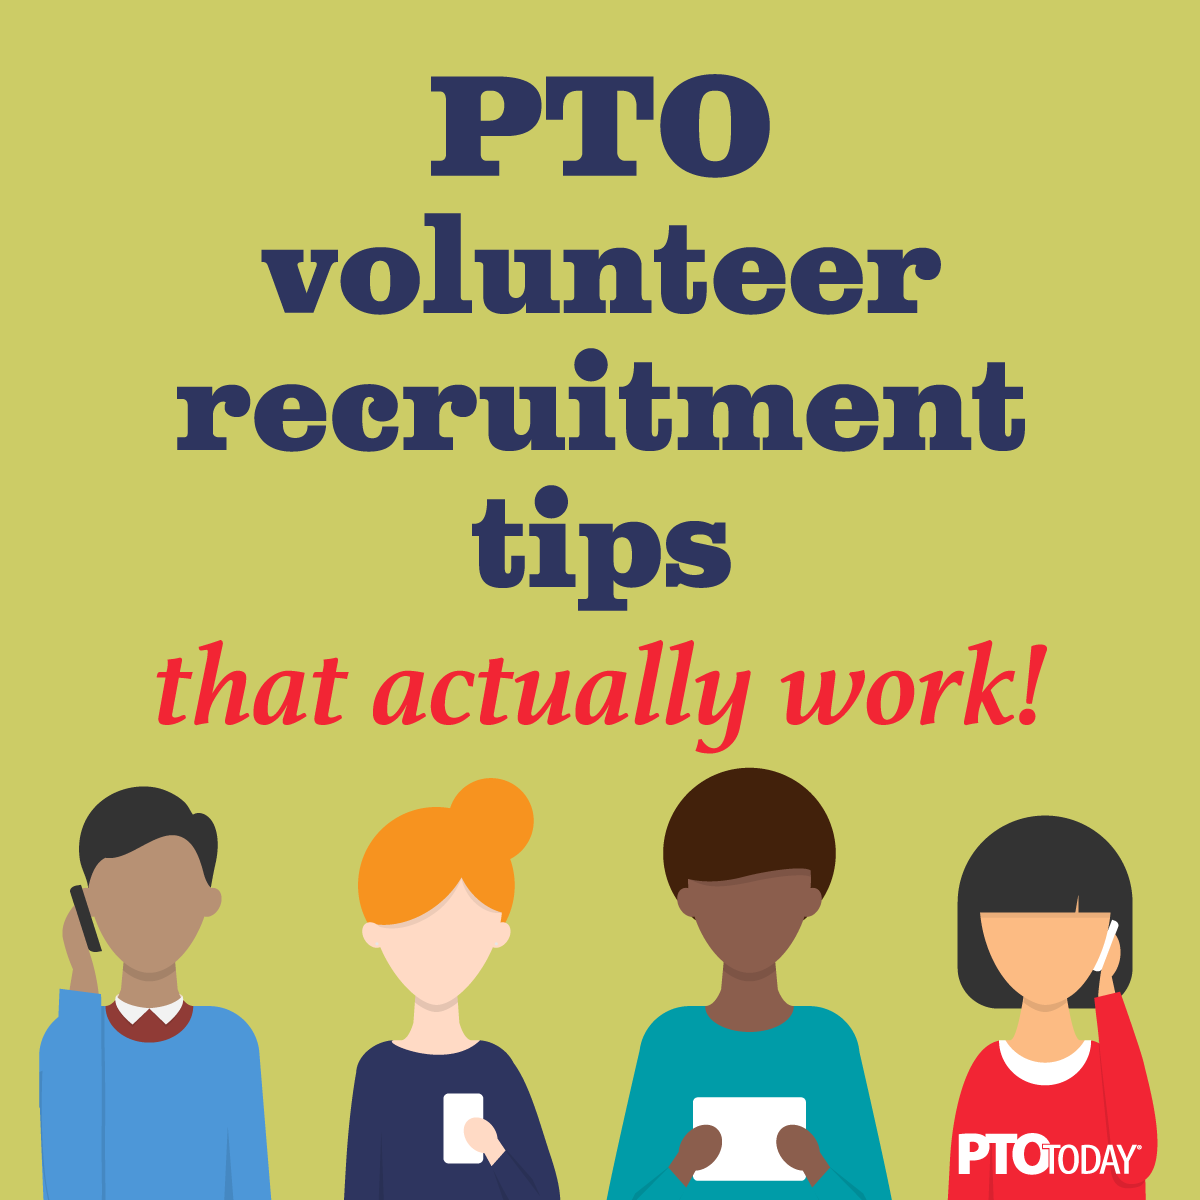 Volunteer recruitment strategies